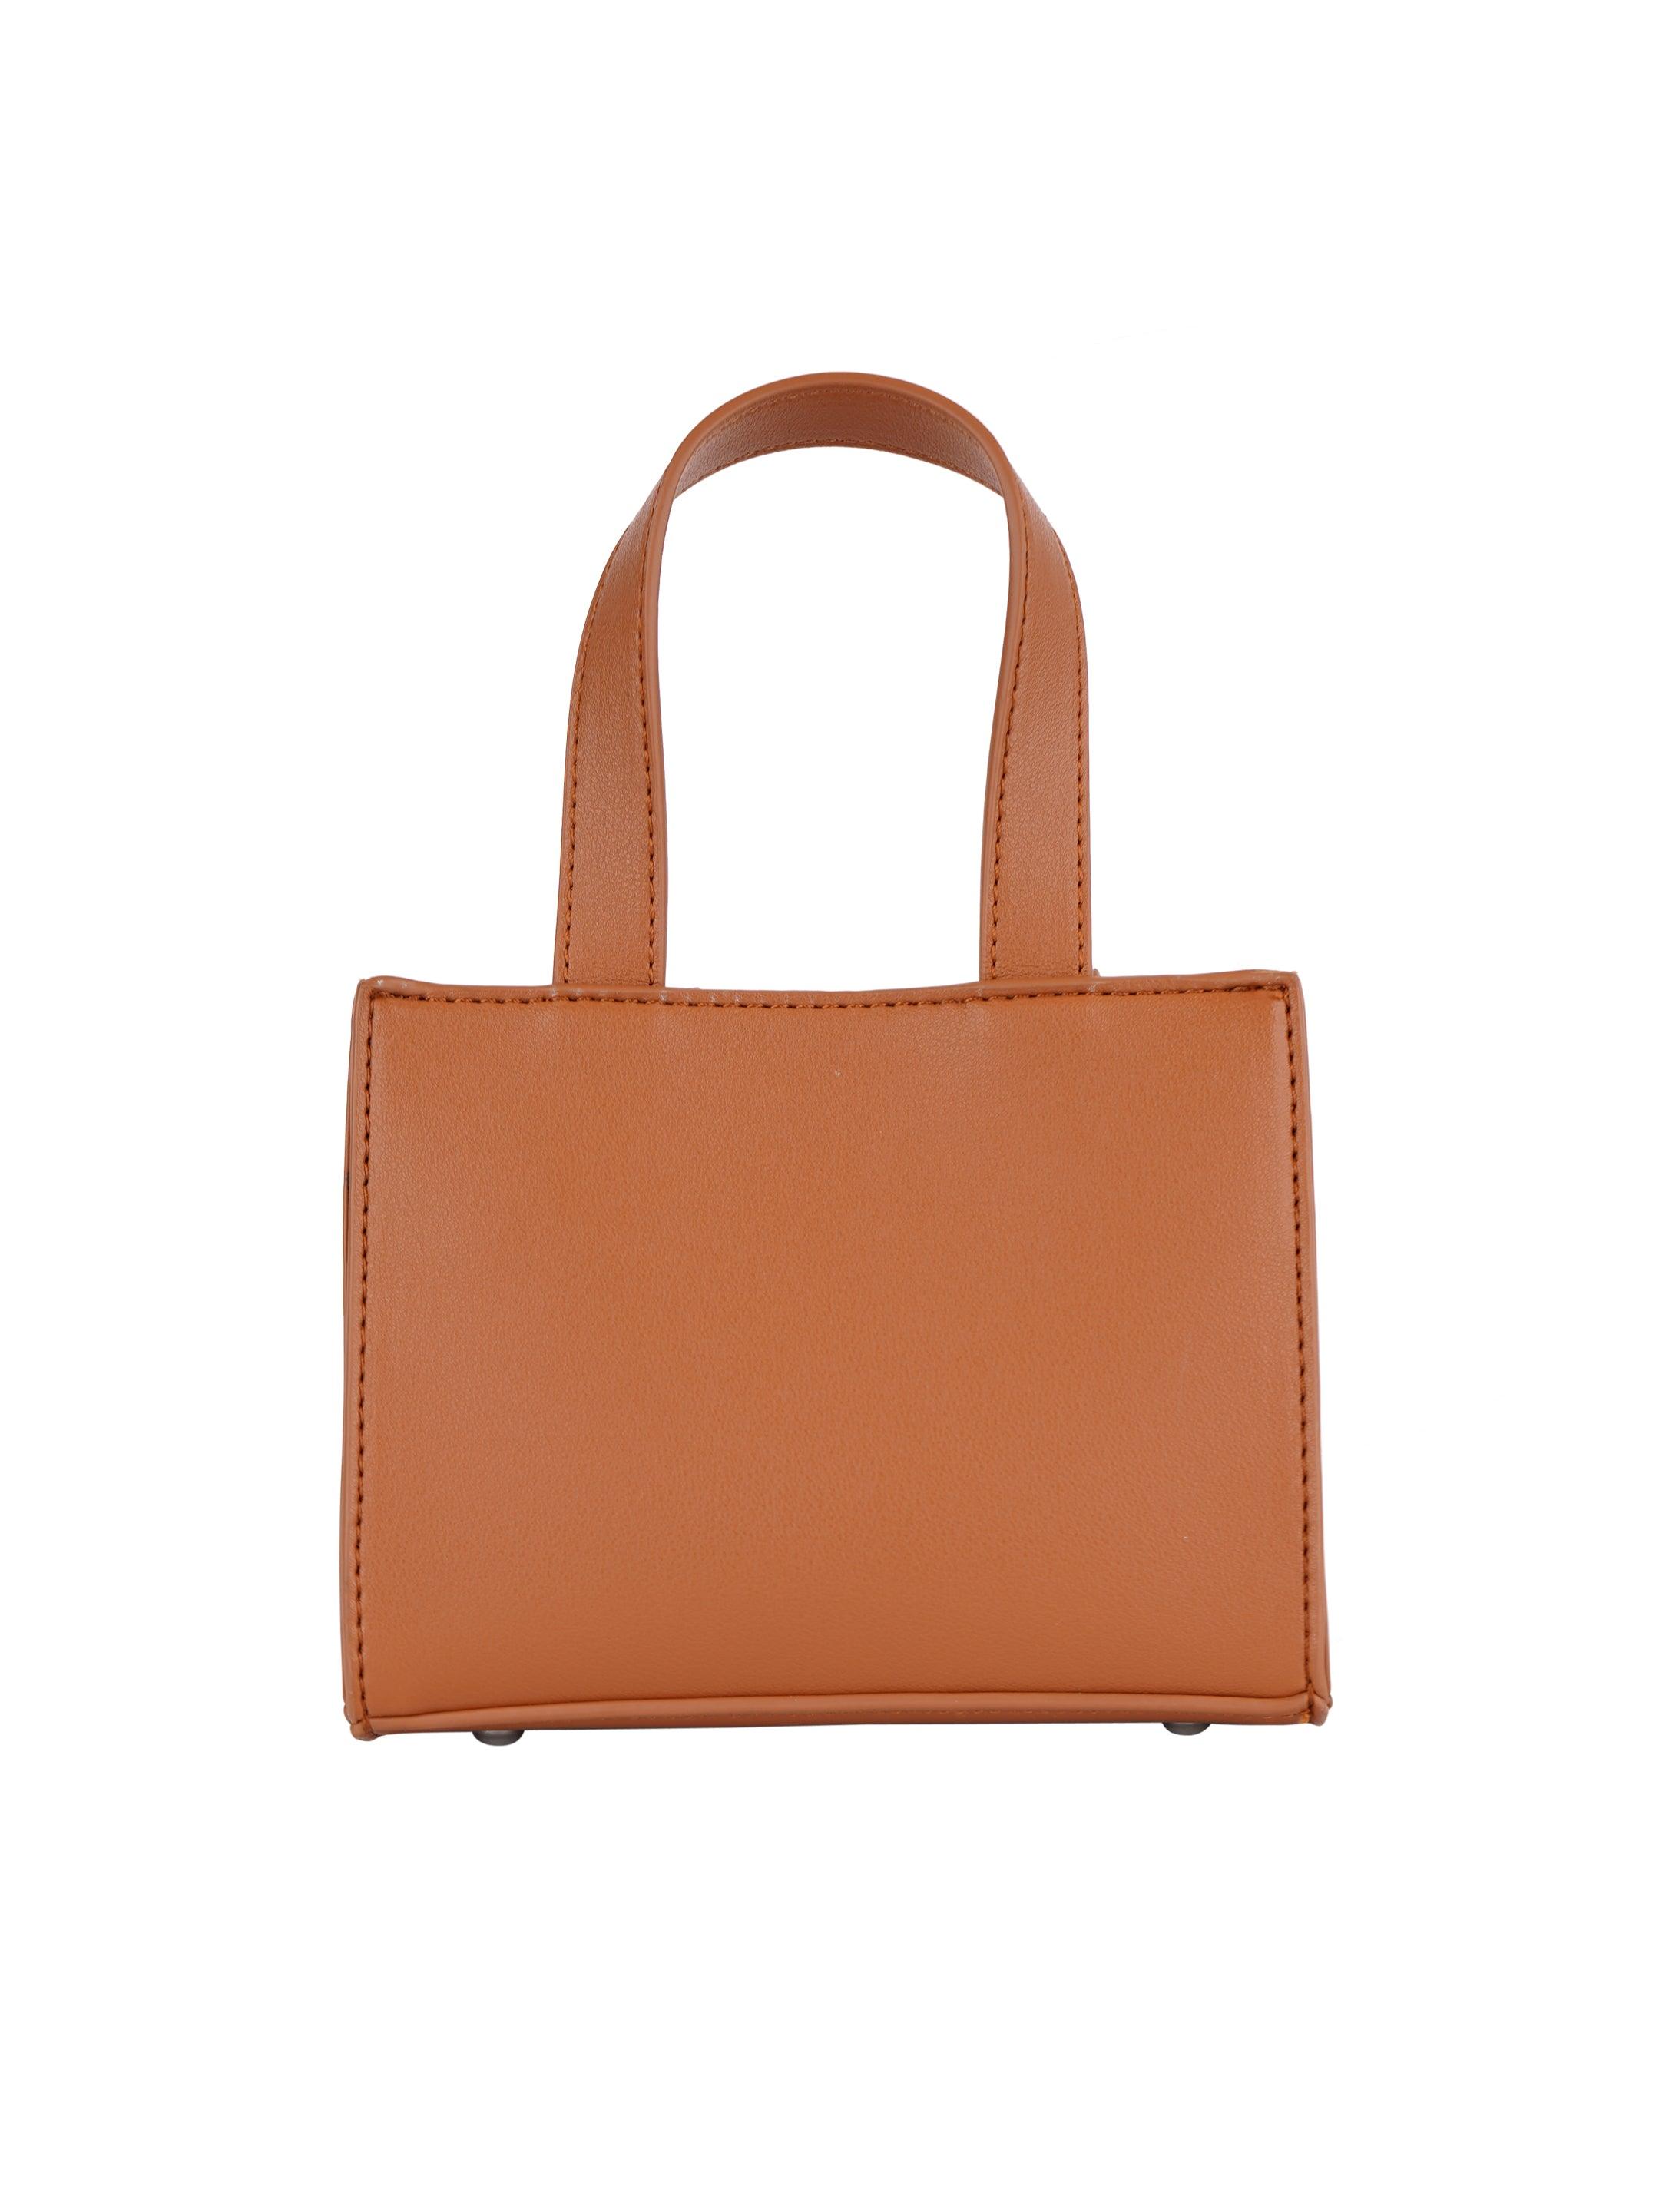 PBW - Vegan Leather Bag (Brown)